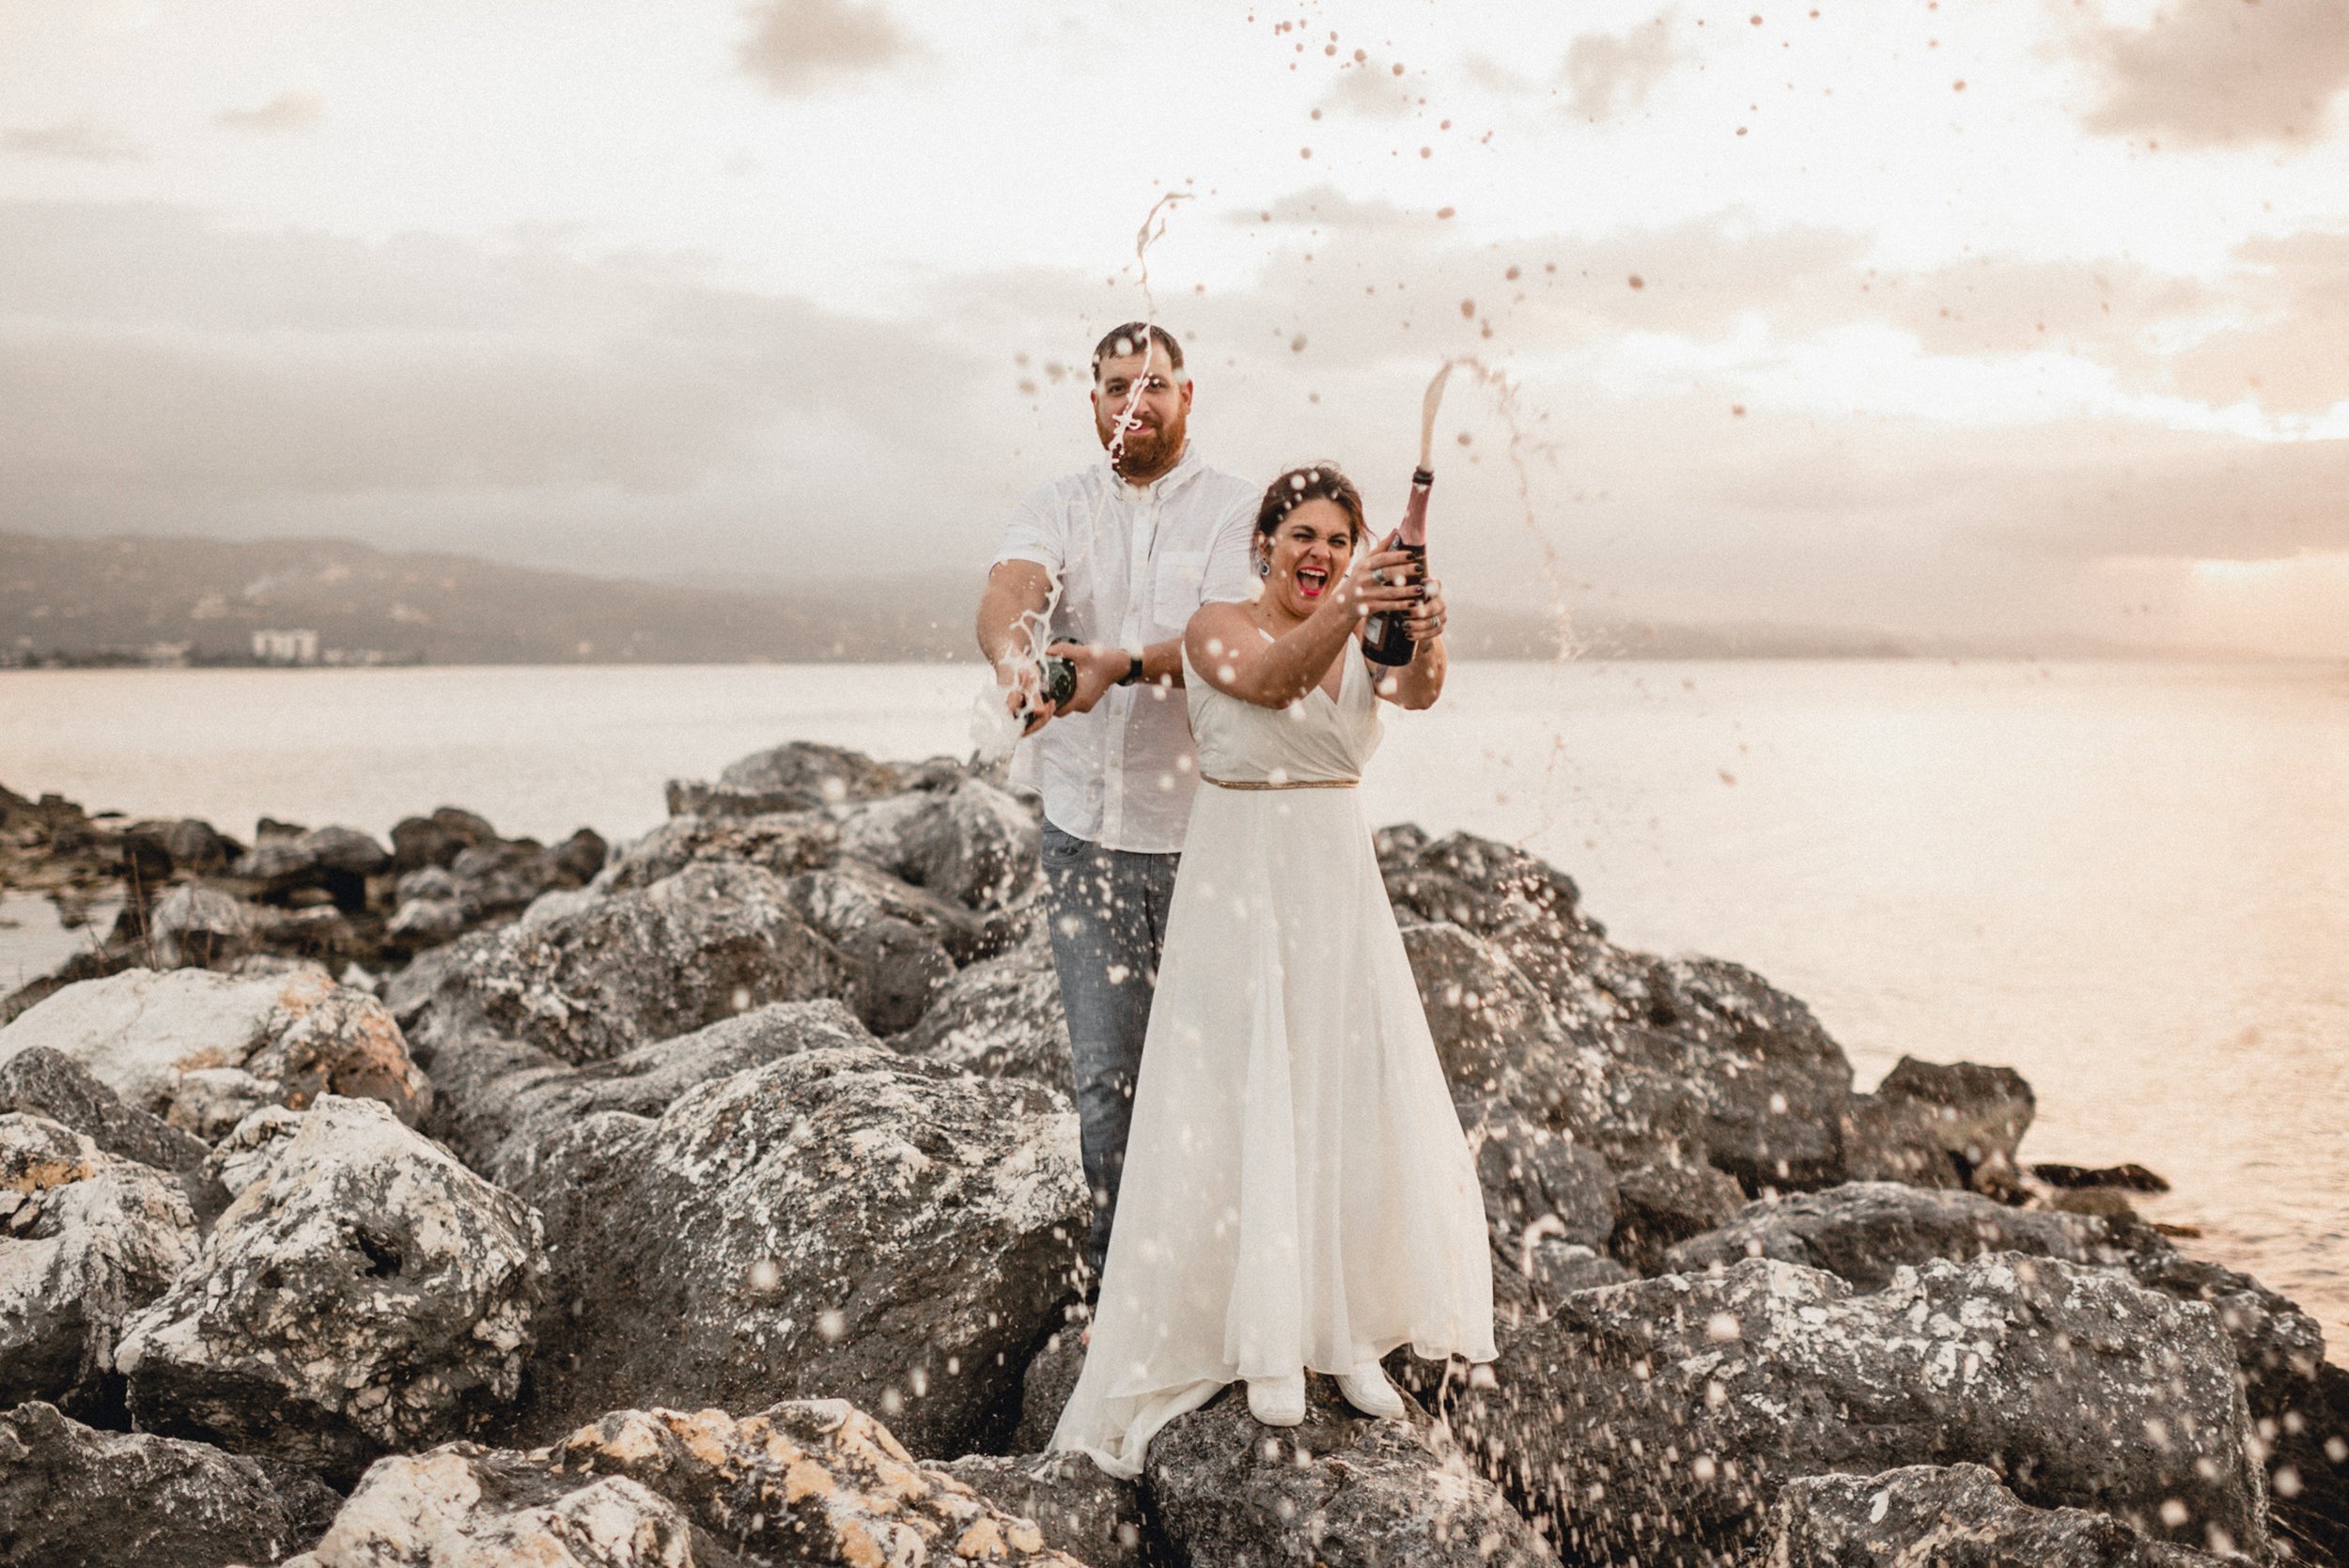 Requiem Images - Destination Travel Adventure Elopement Wedding Photographer - Joanna Mike 793.jpg